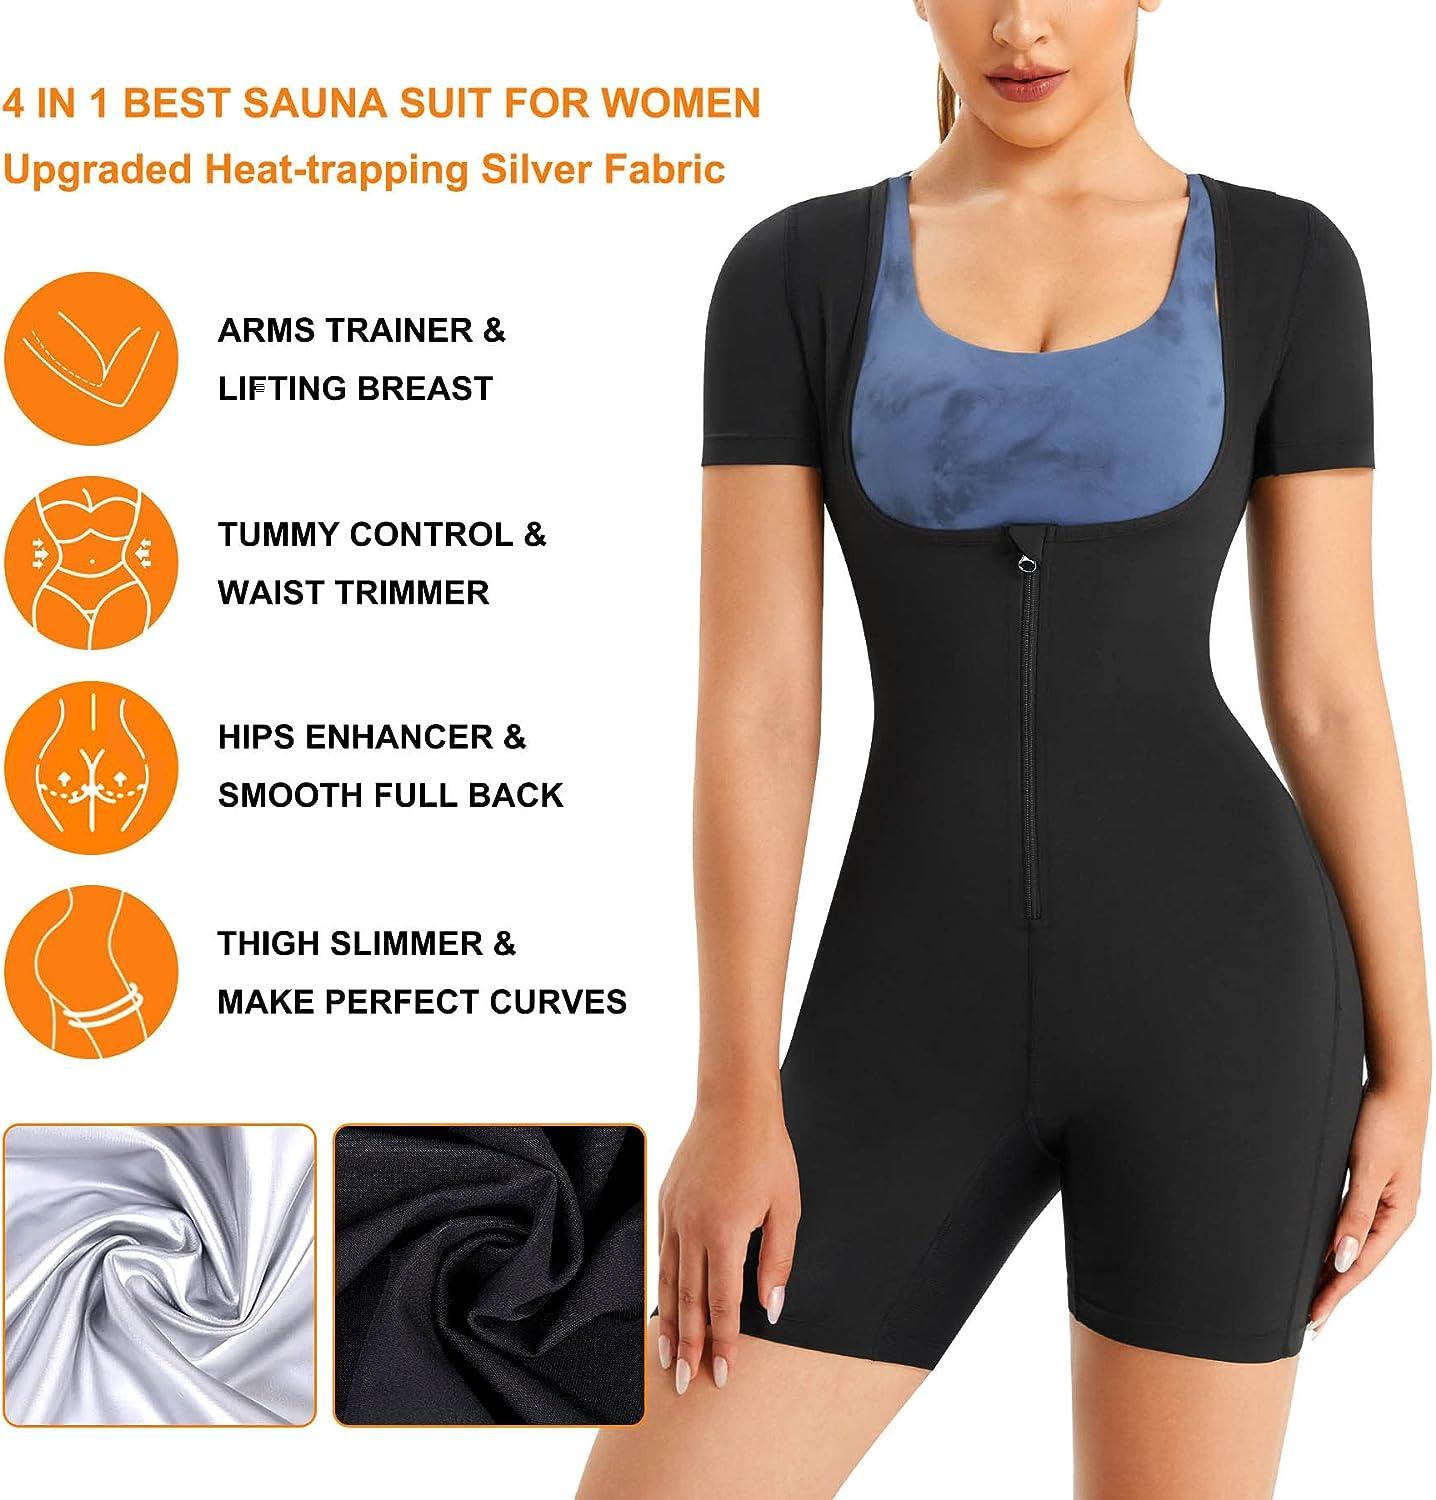 Cheap Women Sauna Suit for Weight Loss Waist Trainer Sweat Vest